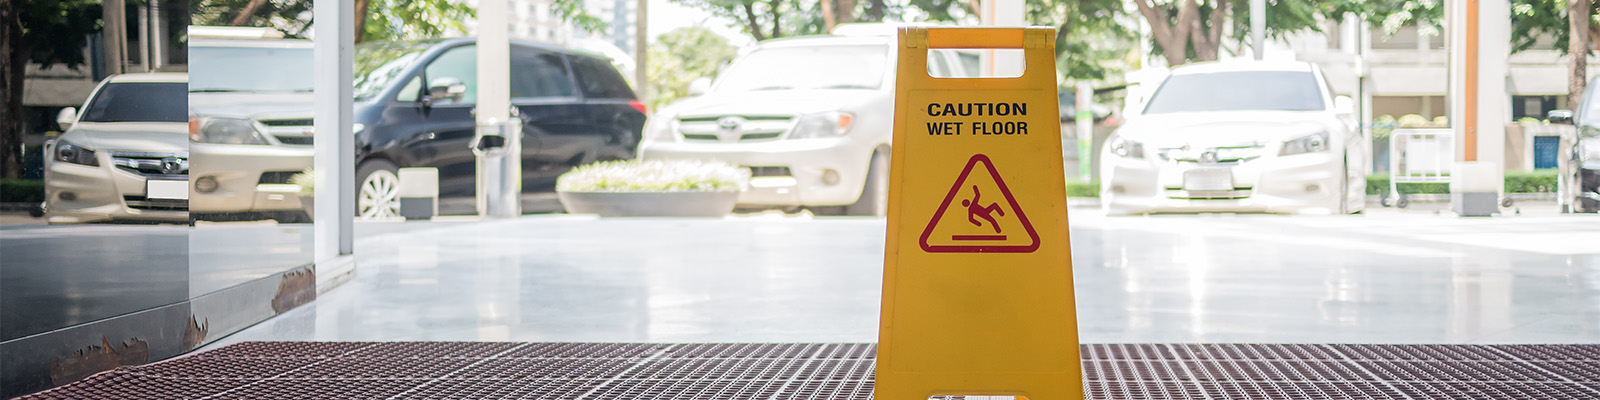 wet floor sign on the floor near an outdoor parking